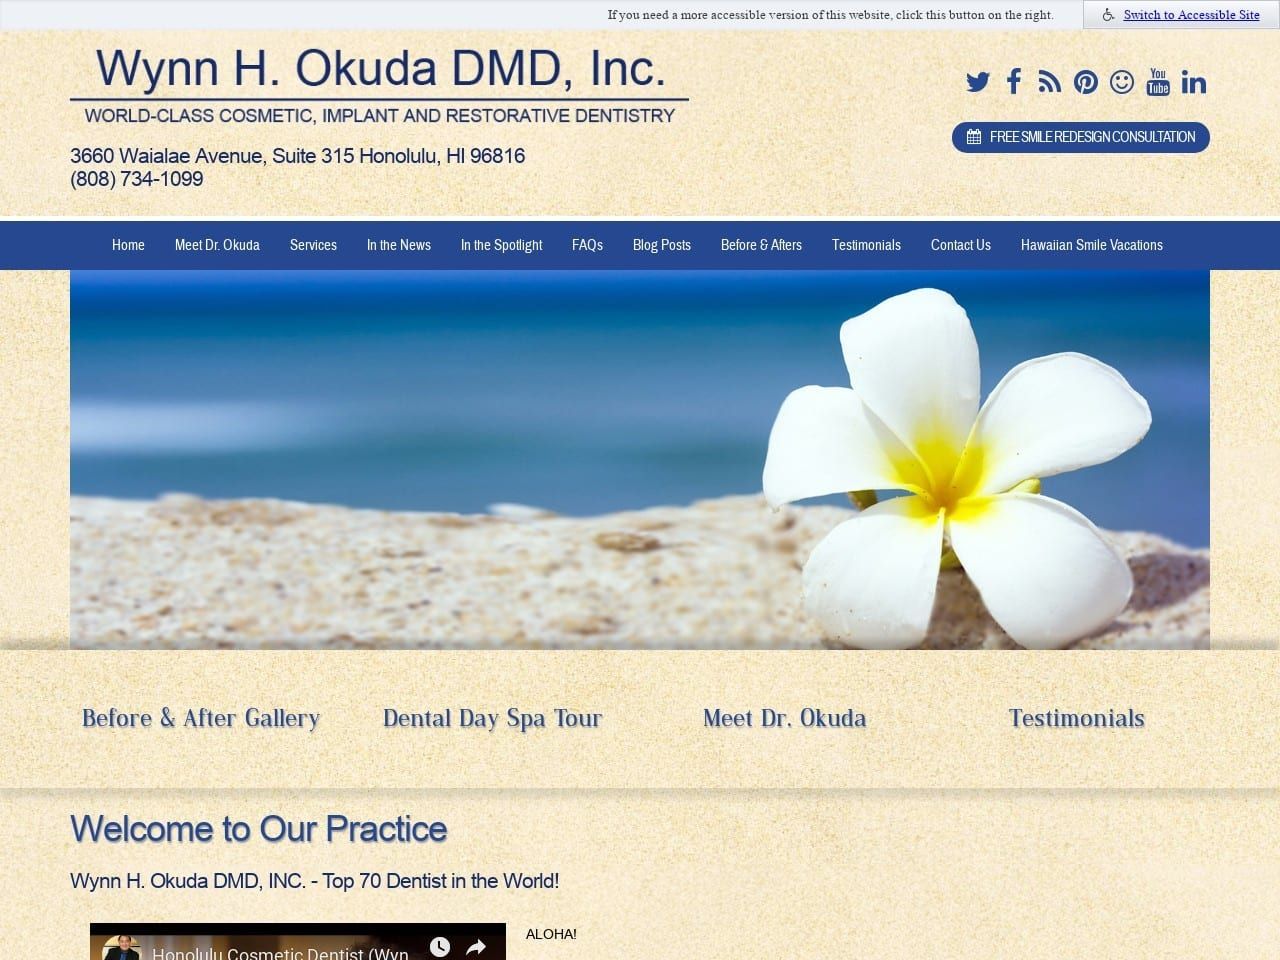 Okudacosmetic Dentistry Website Screenshot from okudacosmeticdentistry.com